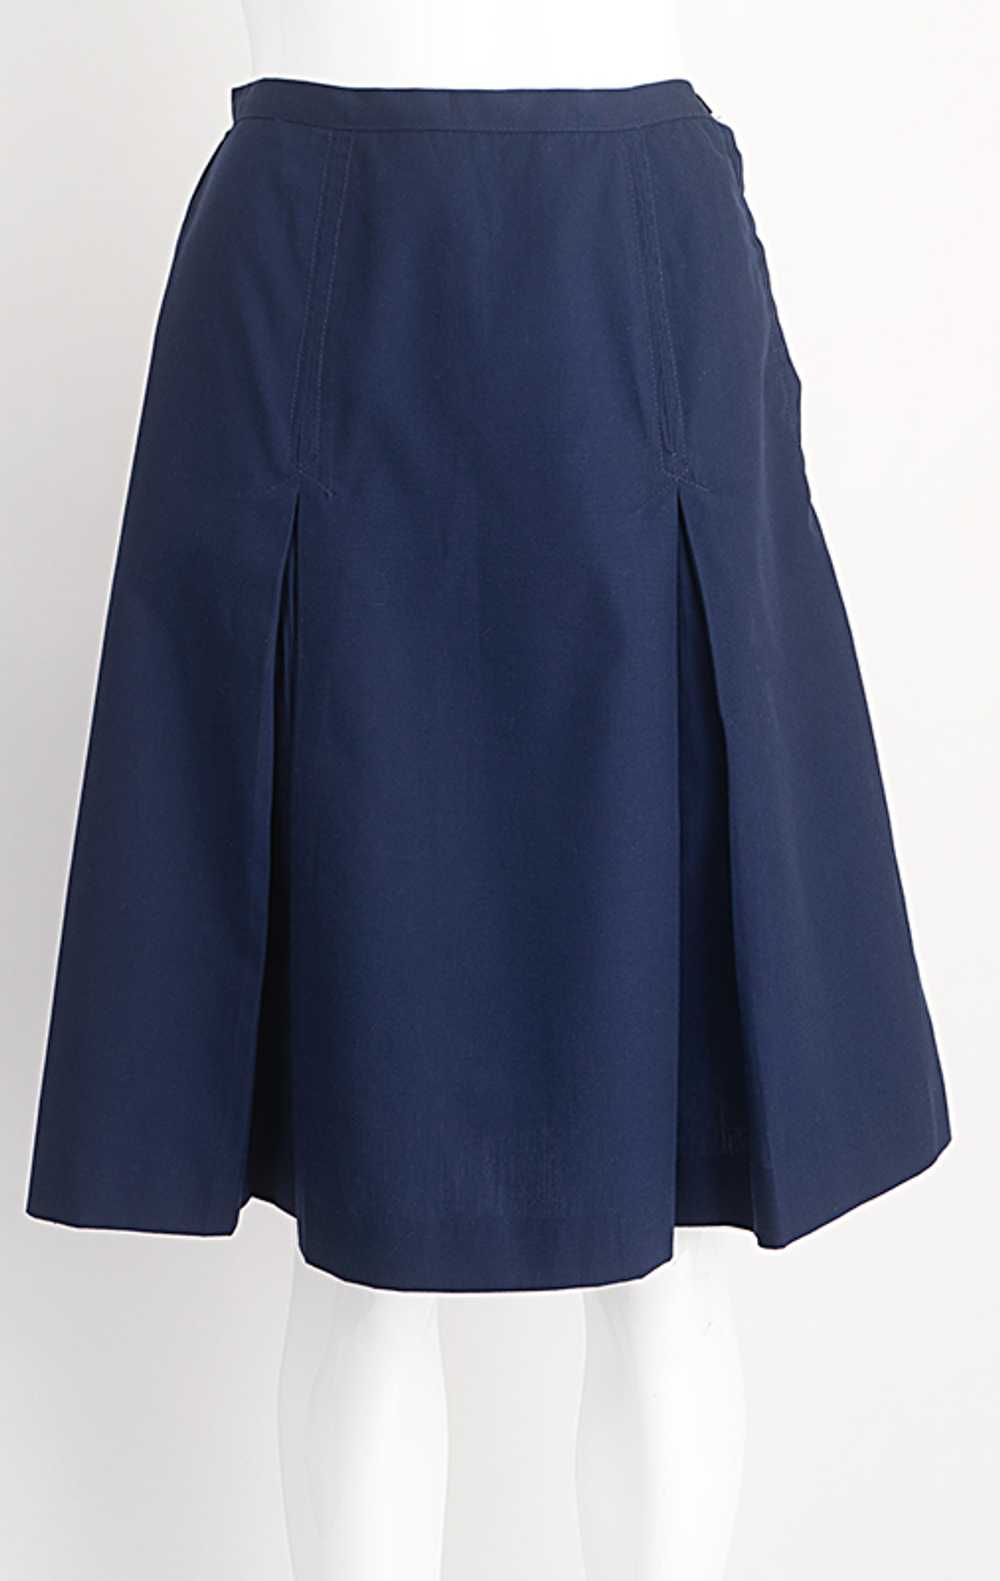 1940s Navy Pleated Skirt - image 2